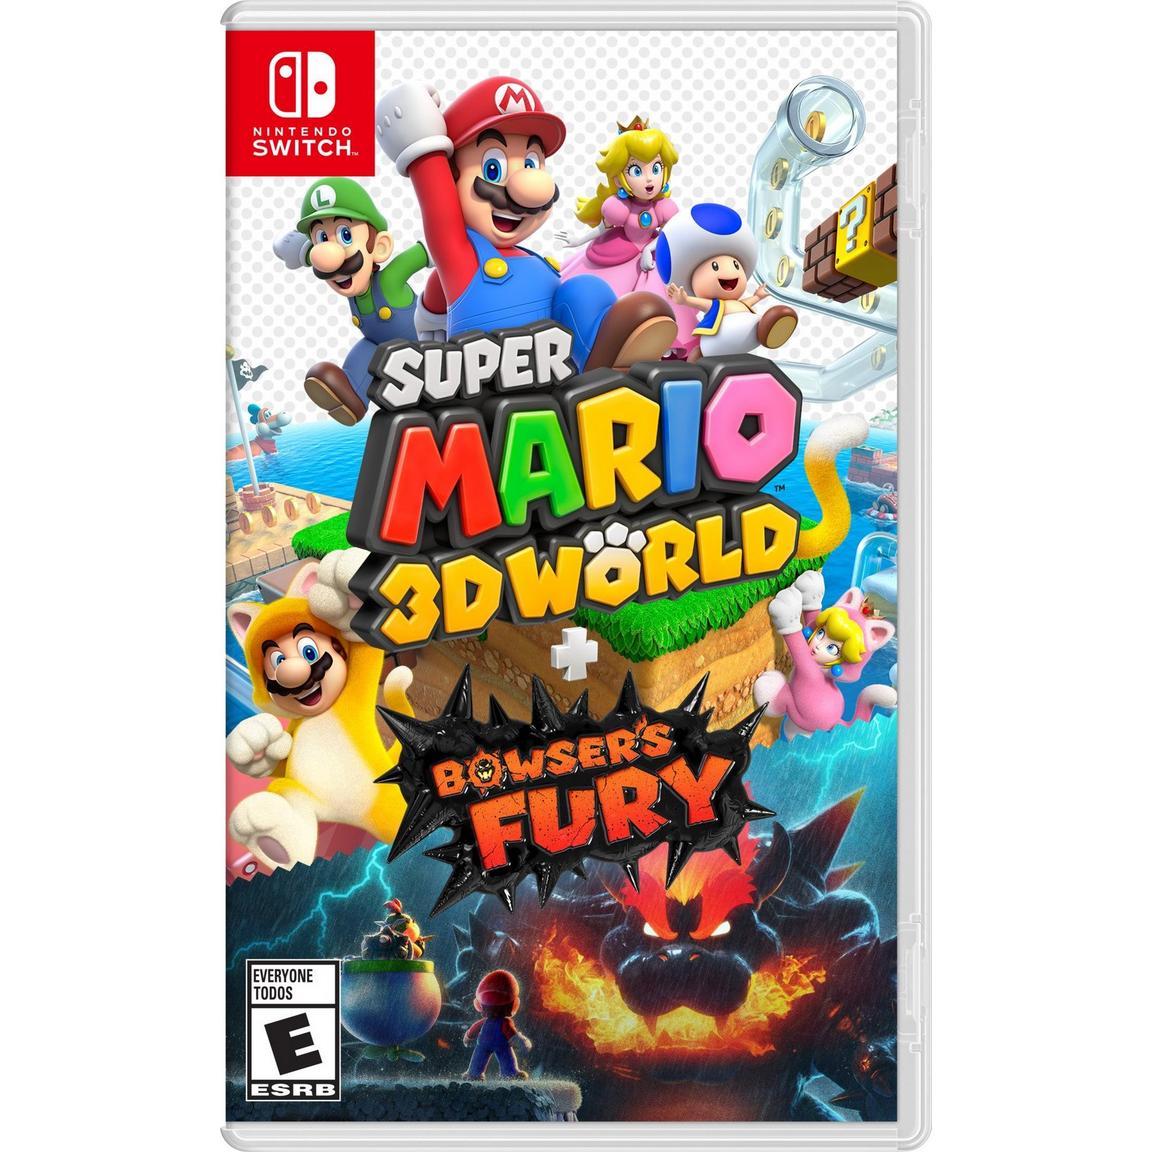 игра super mario 3d world bowsers fury nintendo switch русская версия Видеоигра Super Mario 3D World Plus Bowser's Fury - Nintendo Switch